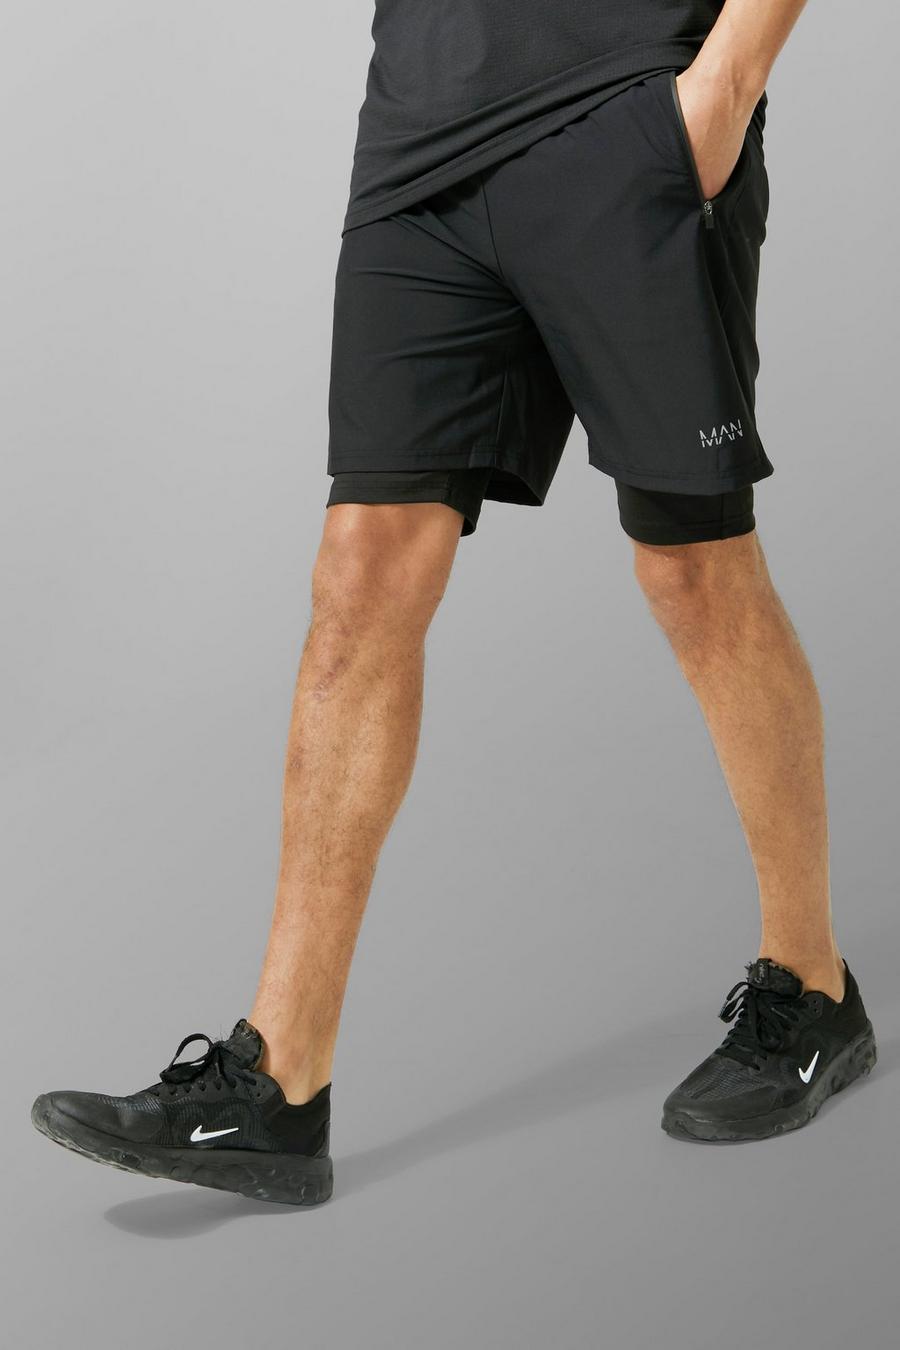 Pantaloncini Tall 2 in 1 Man Active Gym, Black negro